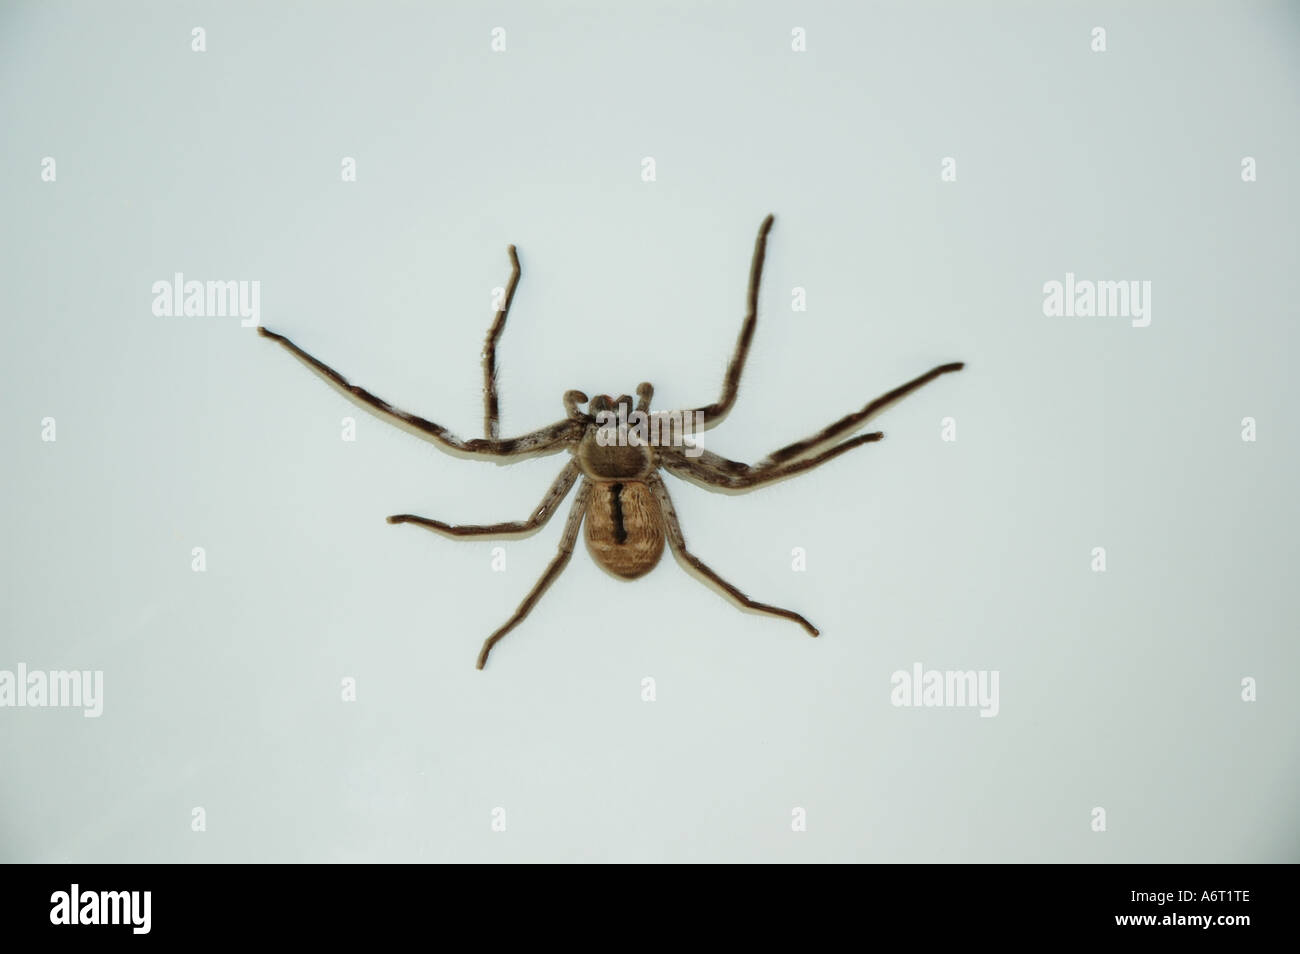 Common Australian Huntsman spider in a bath tub Stock Photo